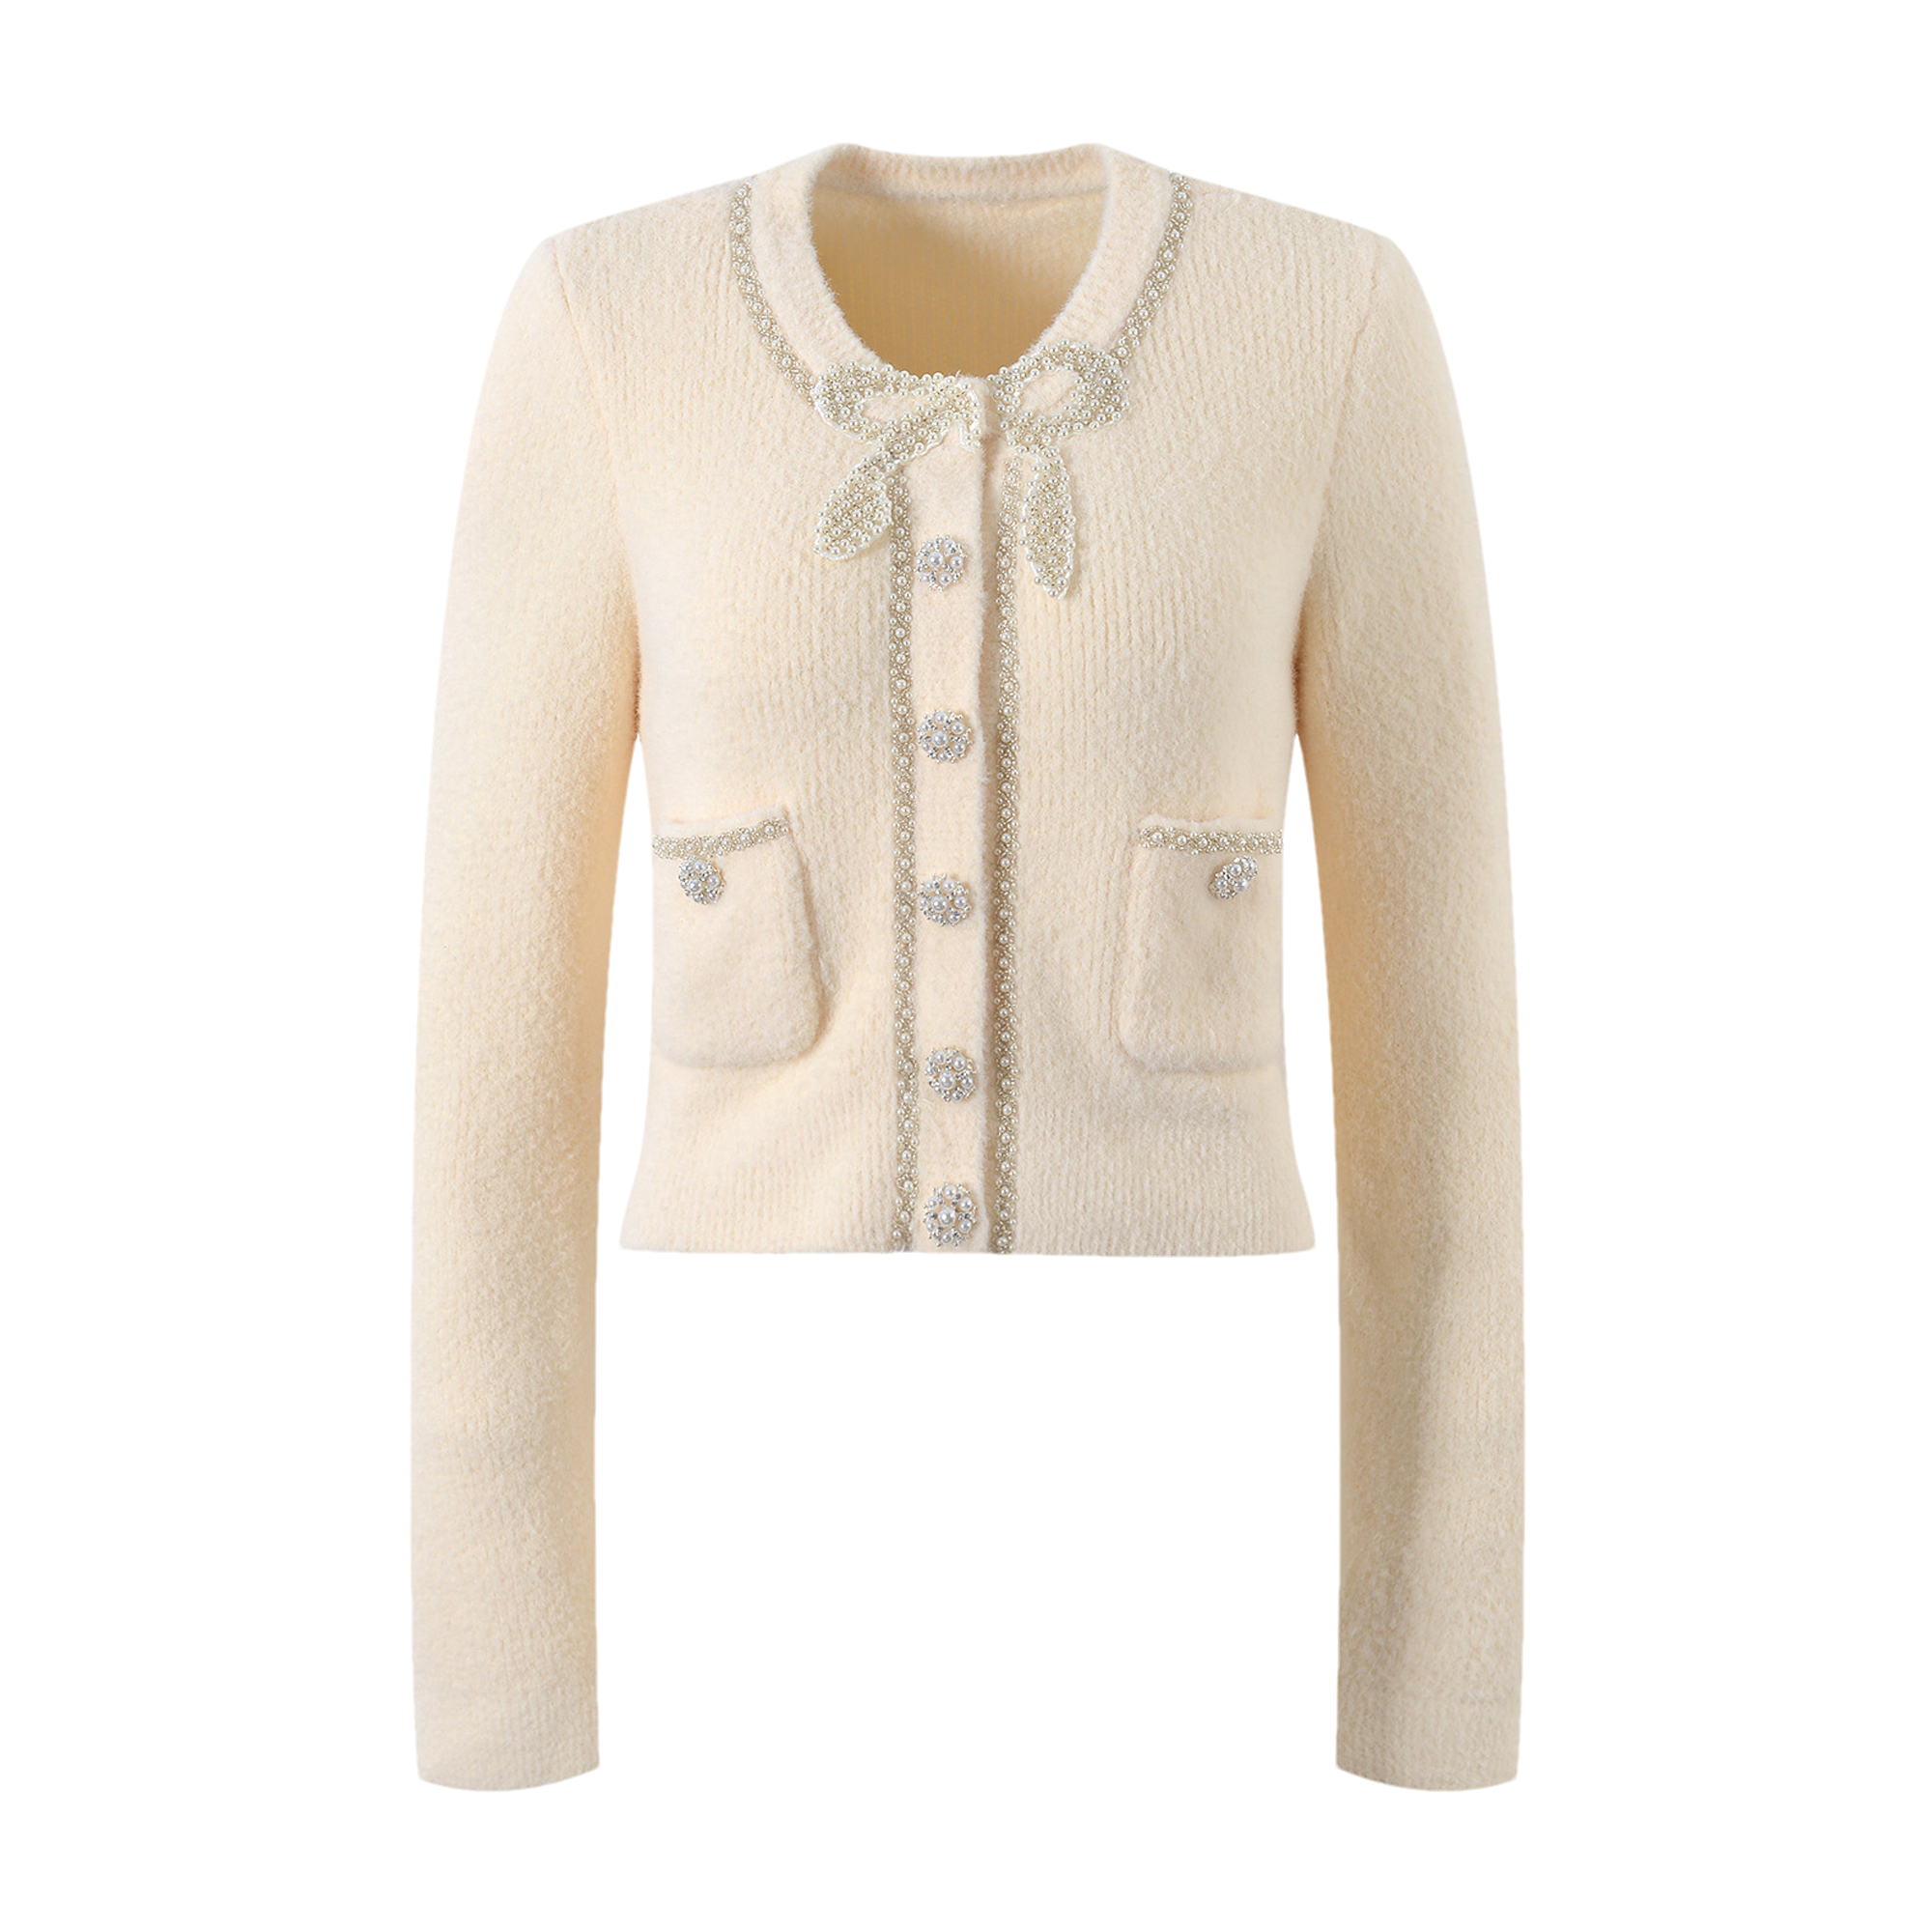 Liane faux-pearl embellished jacket & skirt matching set